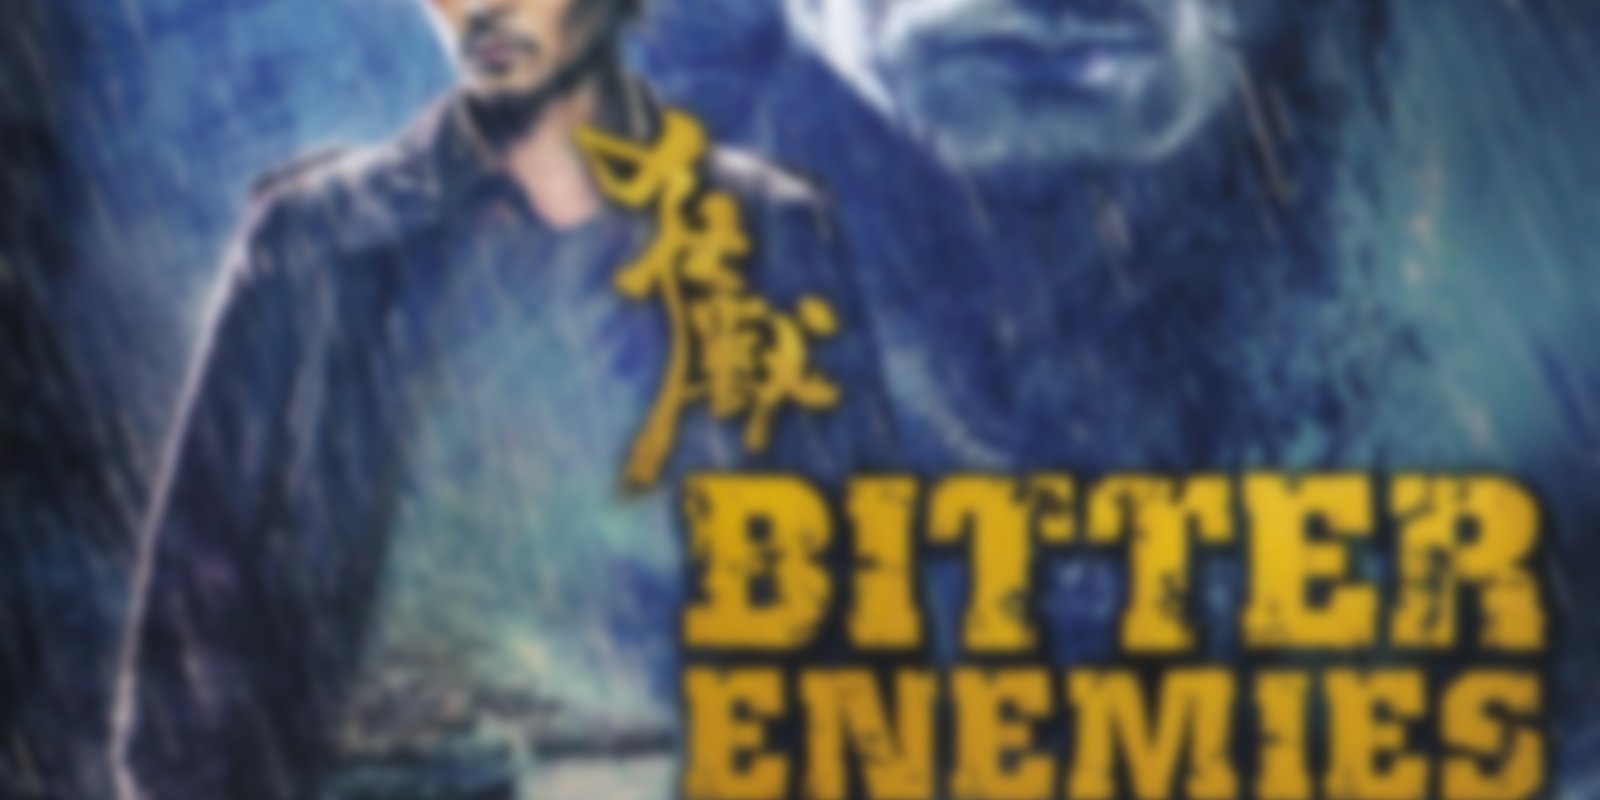 Bitter Enemies